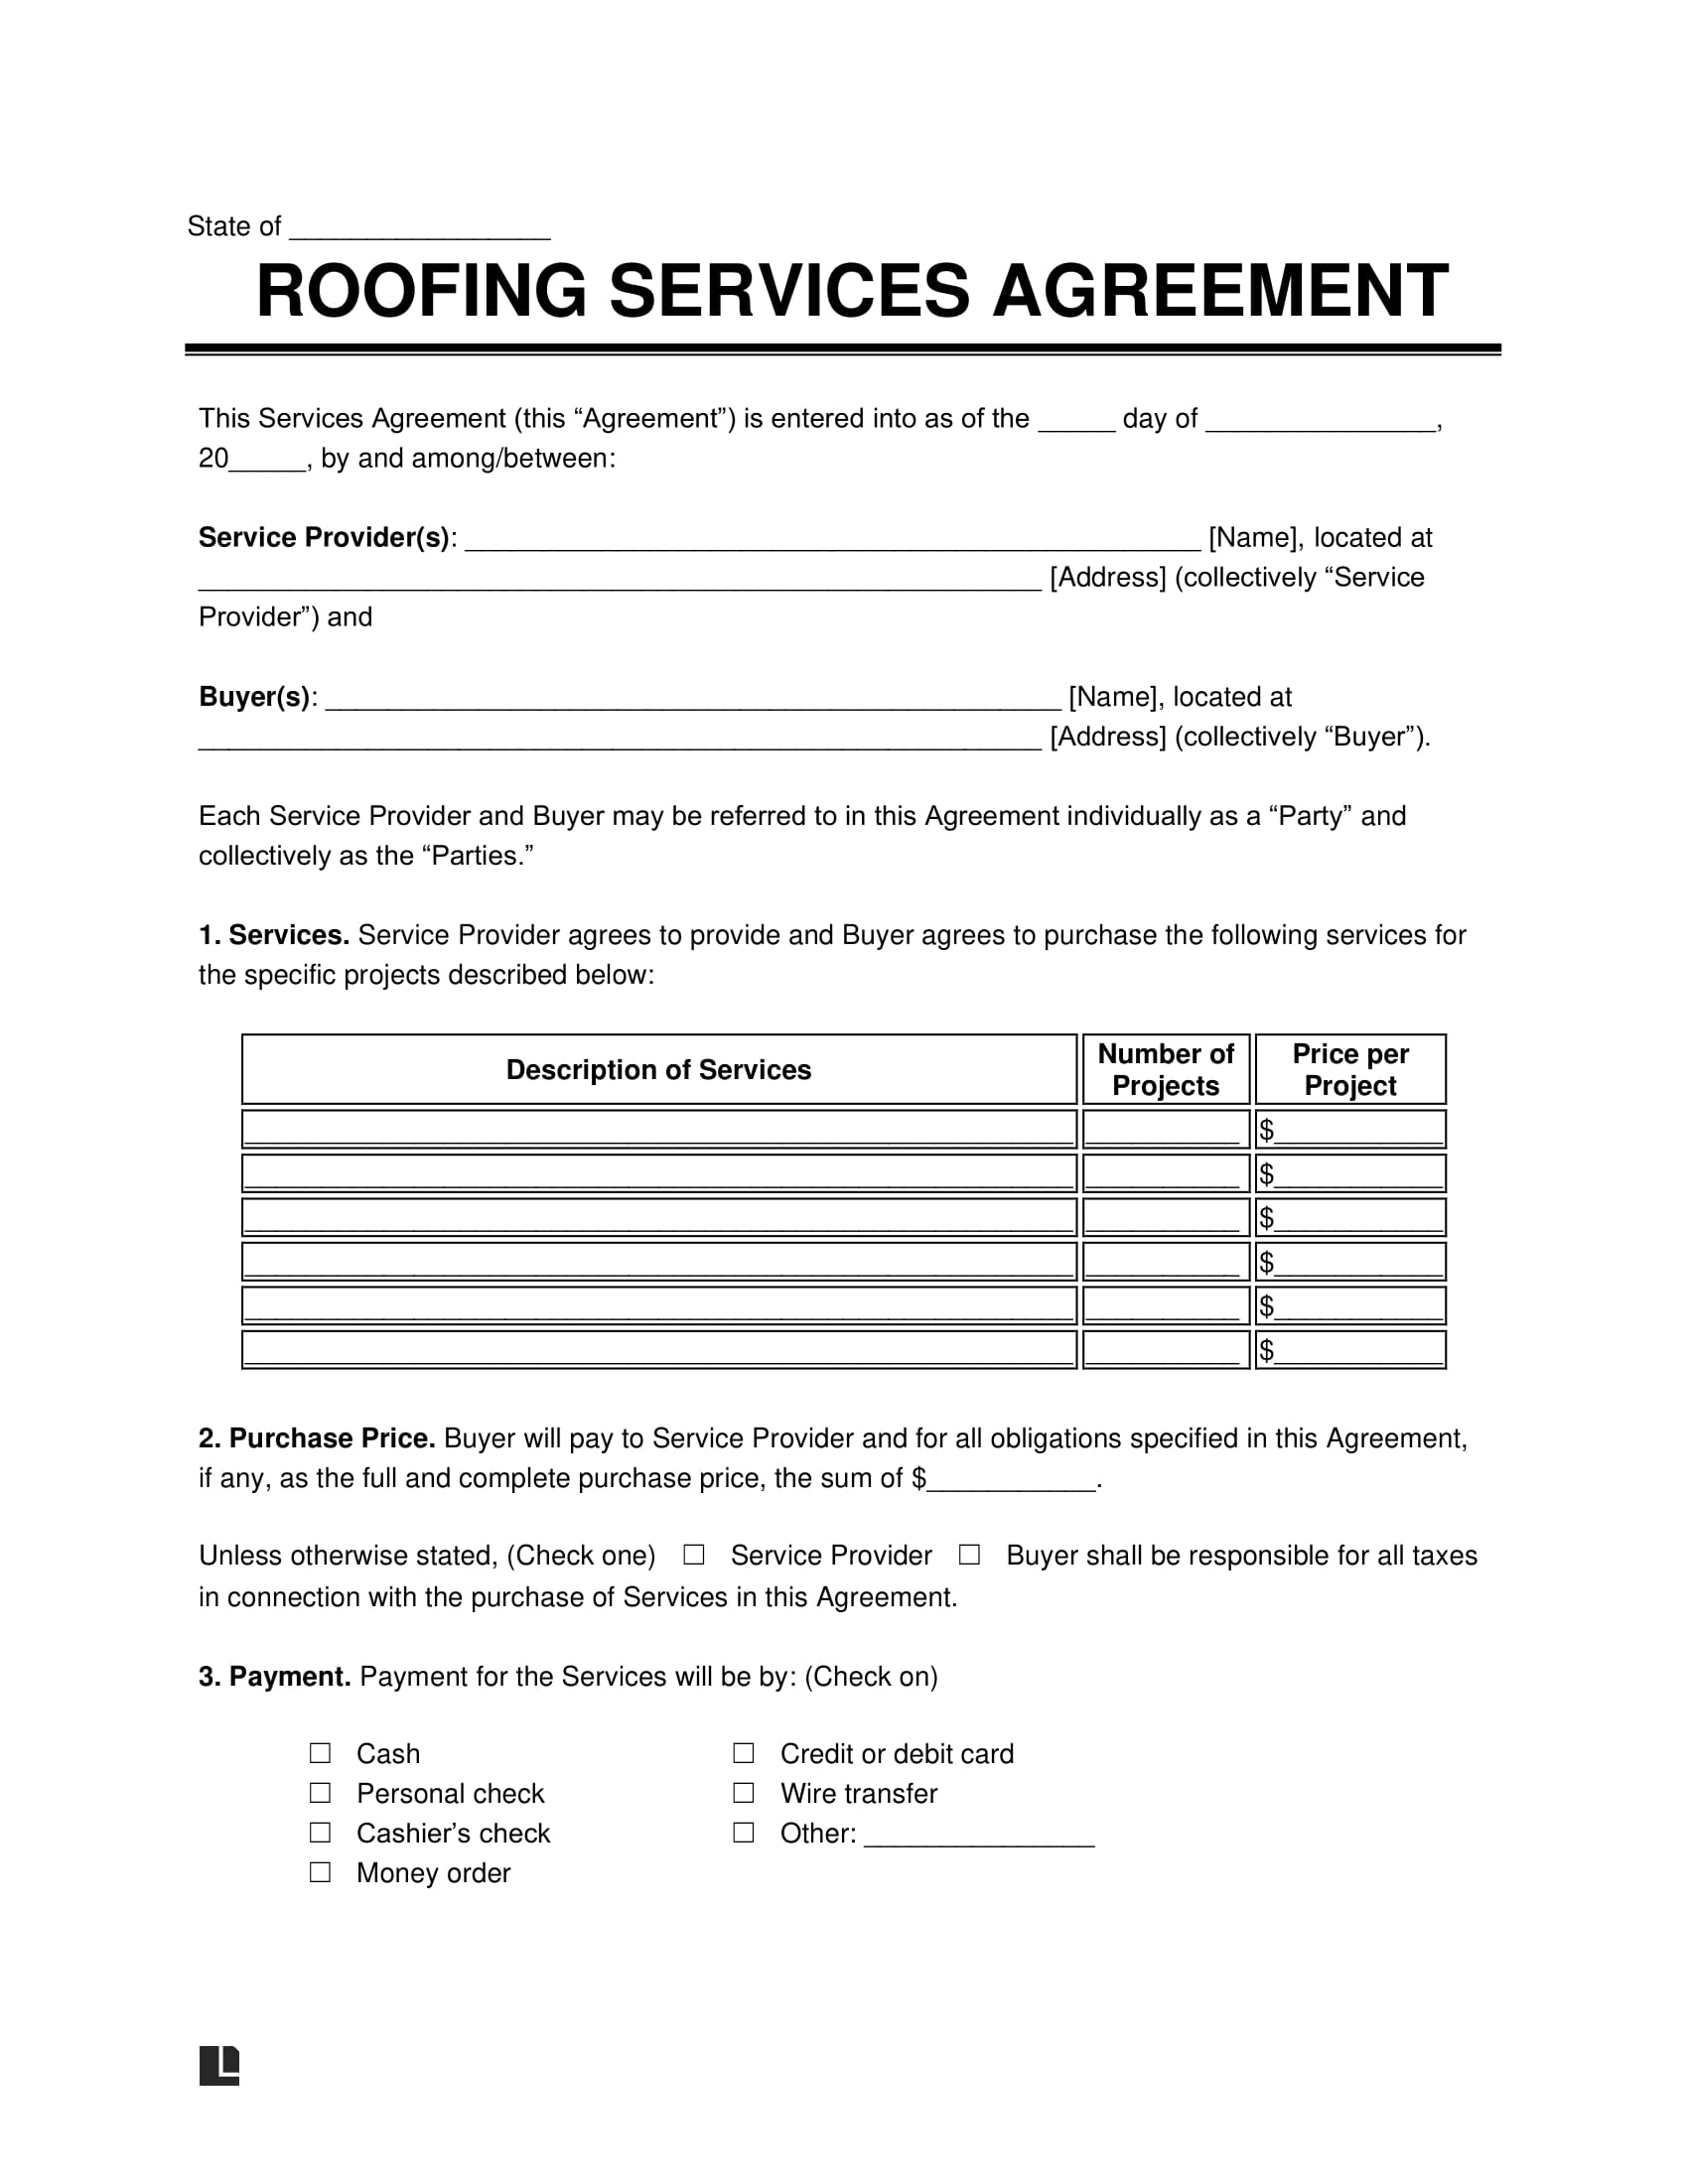 Roofing contract screenshot